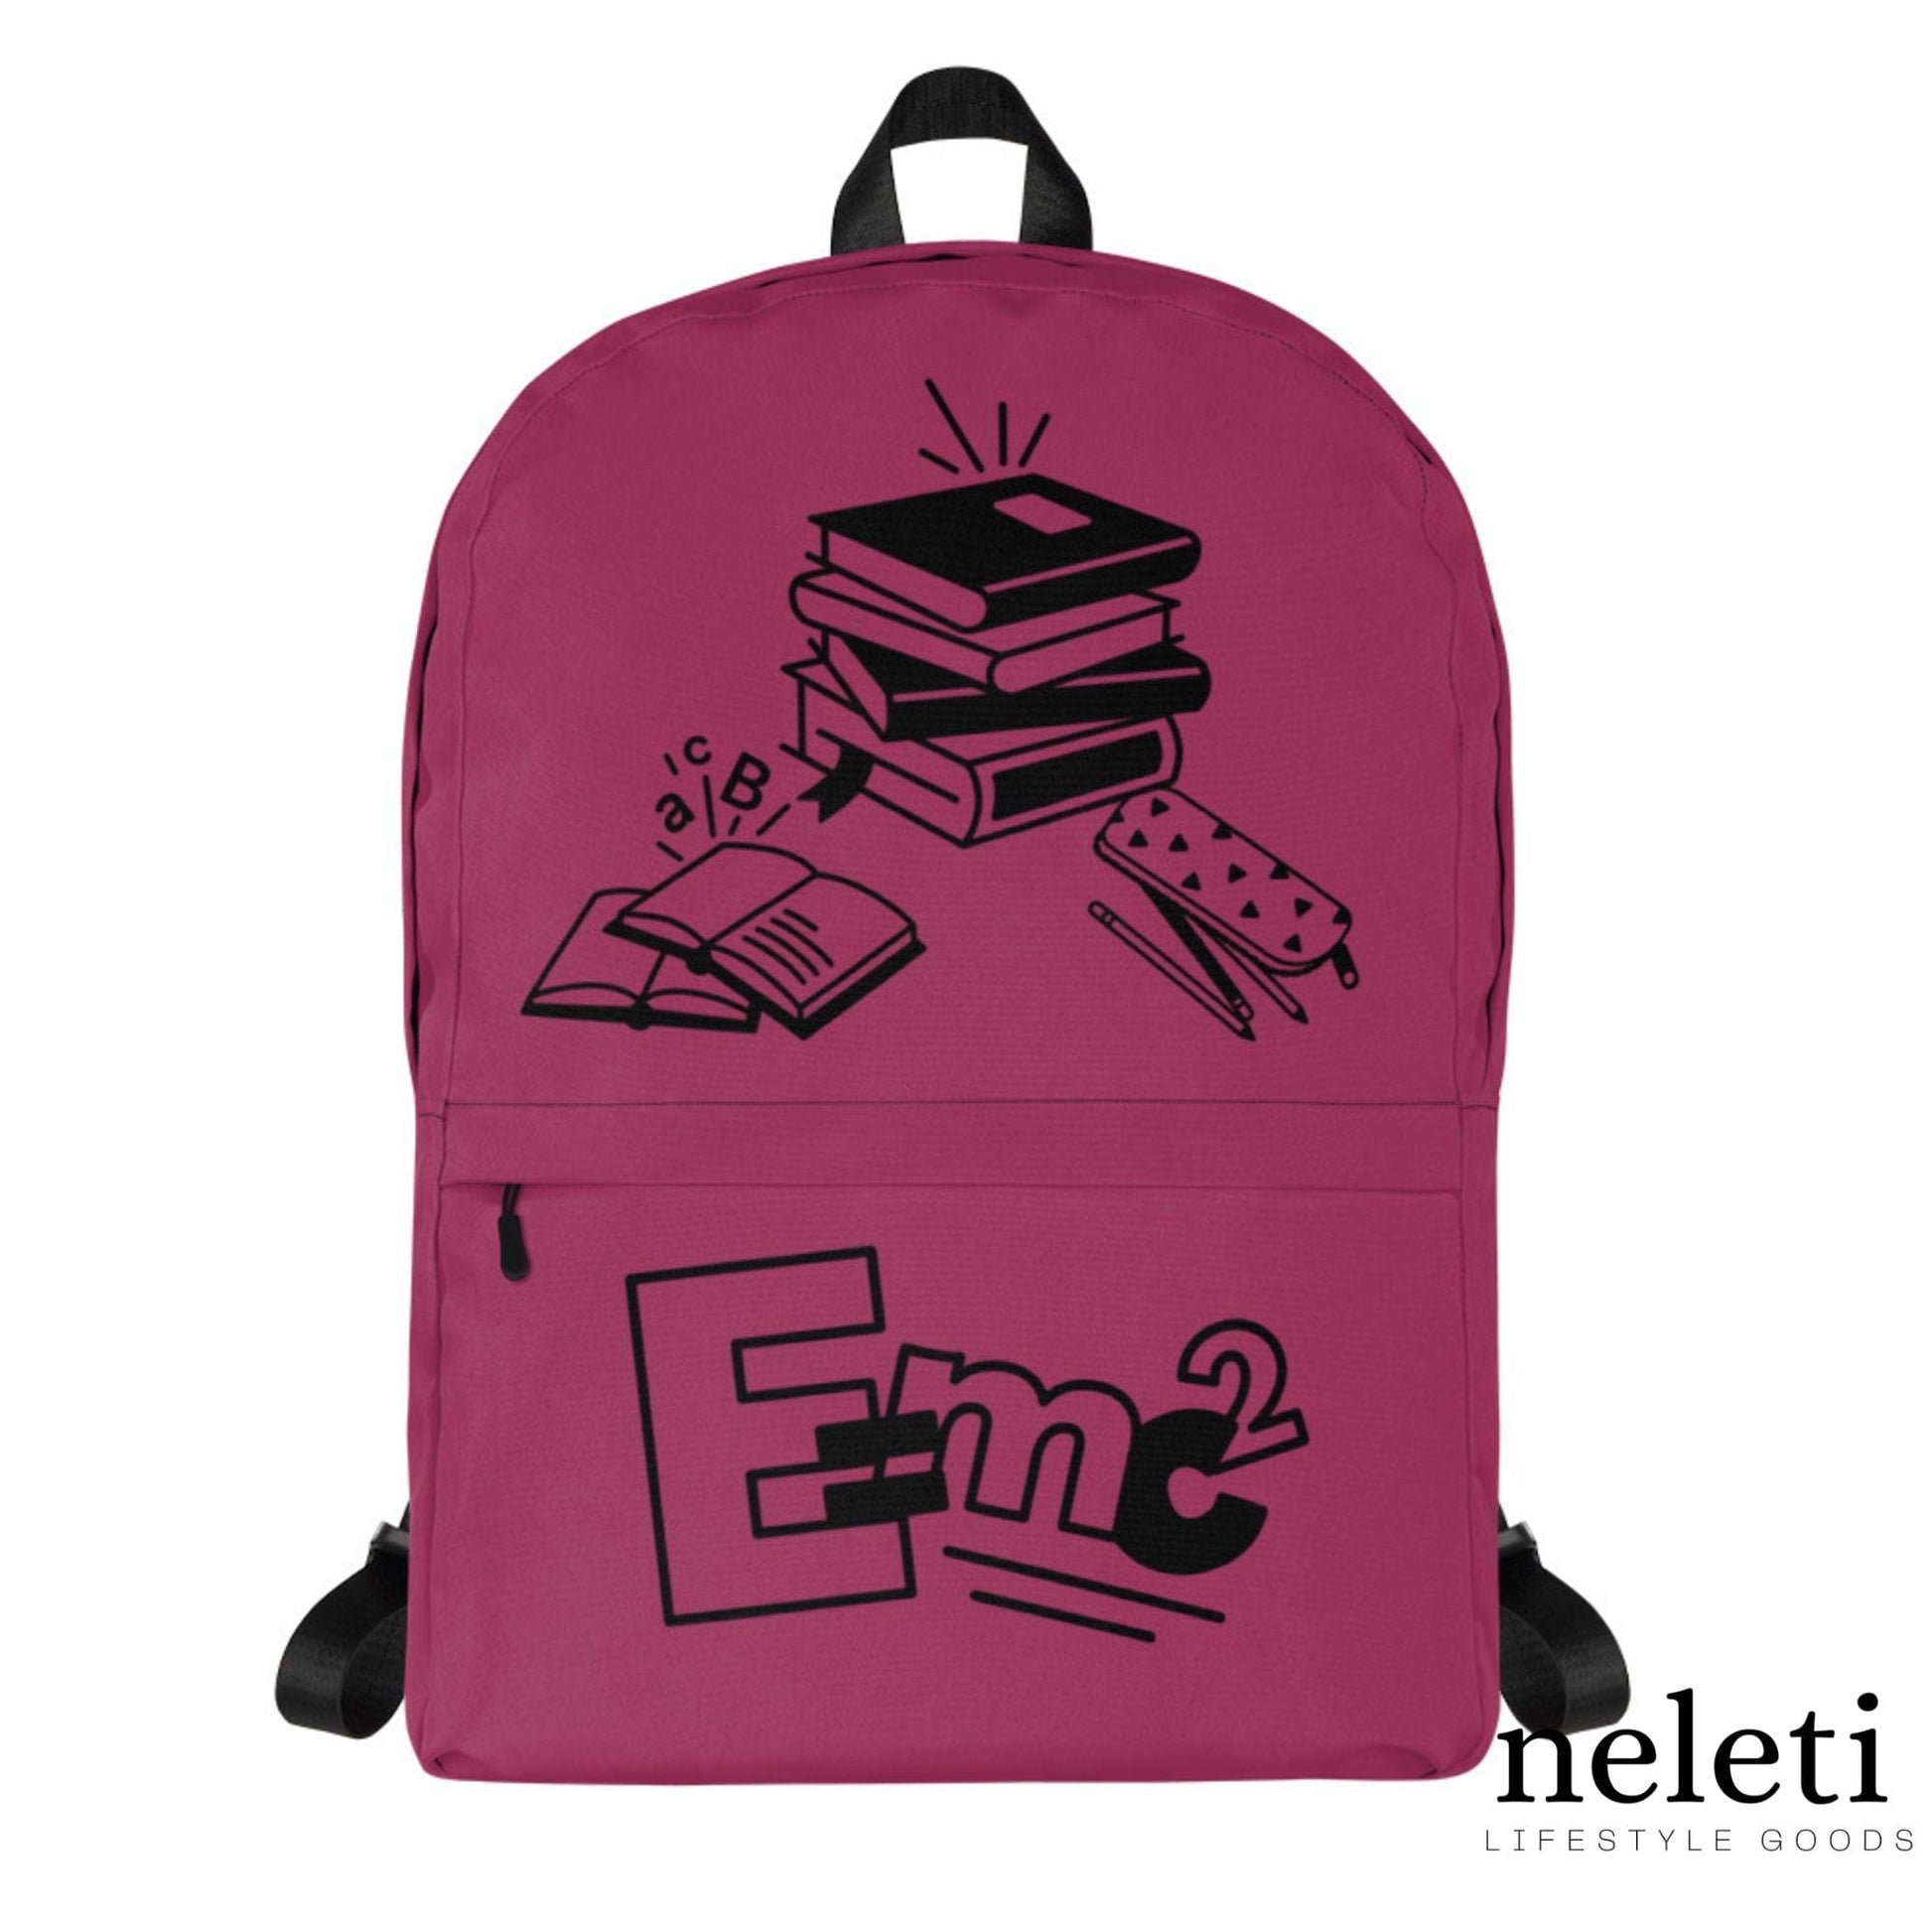 neleti.com-lipstik-backpacks-for-students